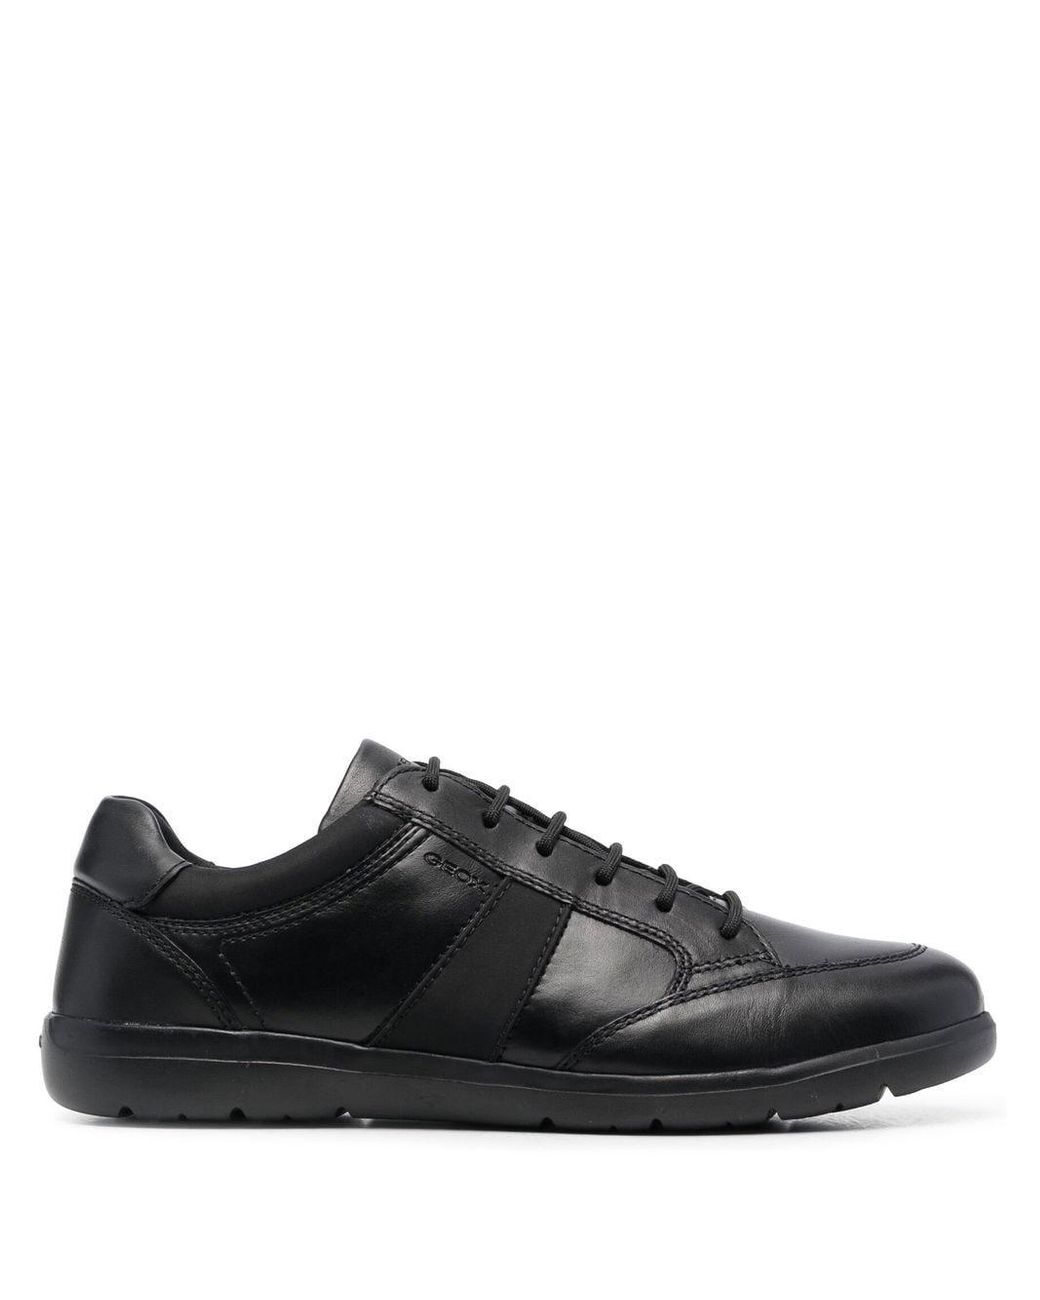 Geox Leitan Low-top Leather Sneakers in Black for Men | Lyst